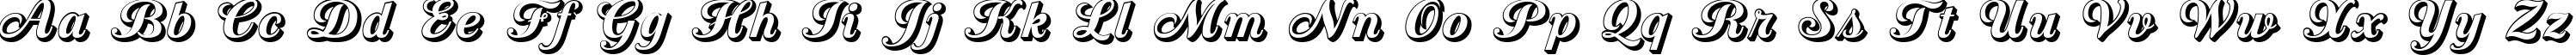 Пример написания английского алфавита шрифтом Country Western Script Open